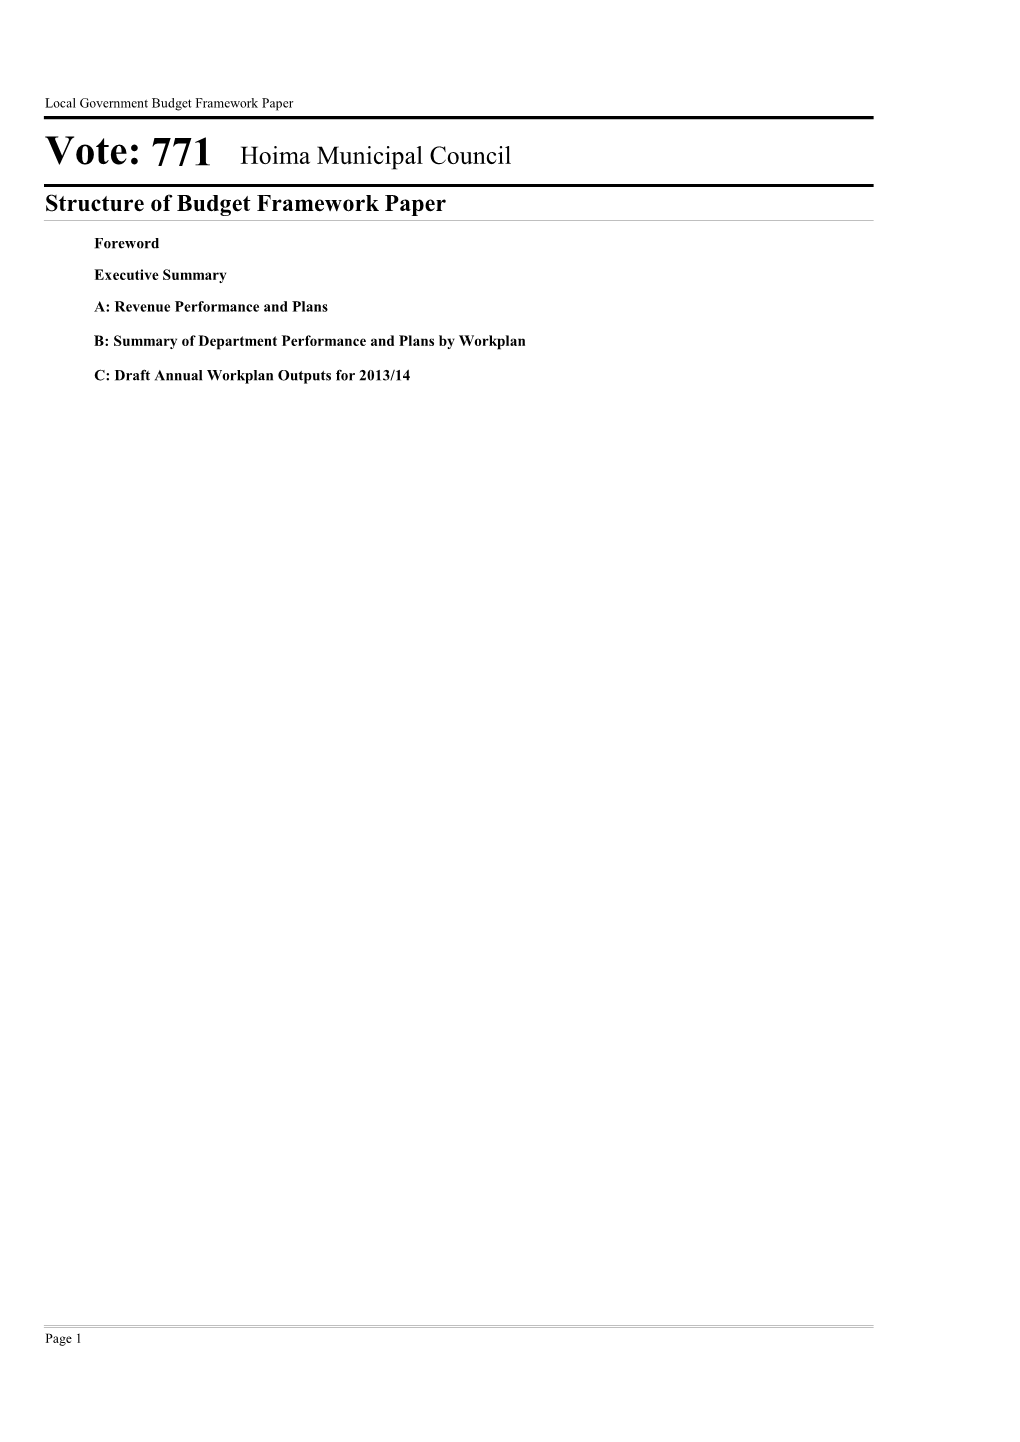 Vote: 771 Hoima Municipal Council Structure of Budget Framework Paper